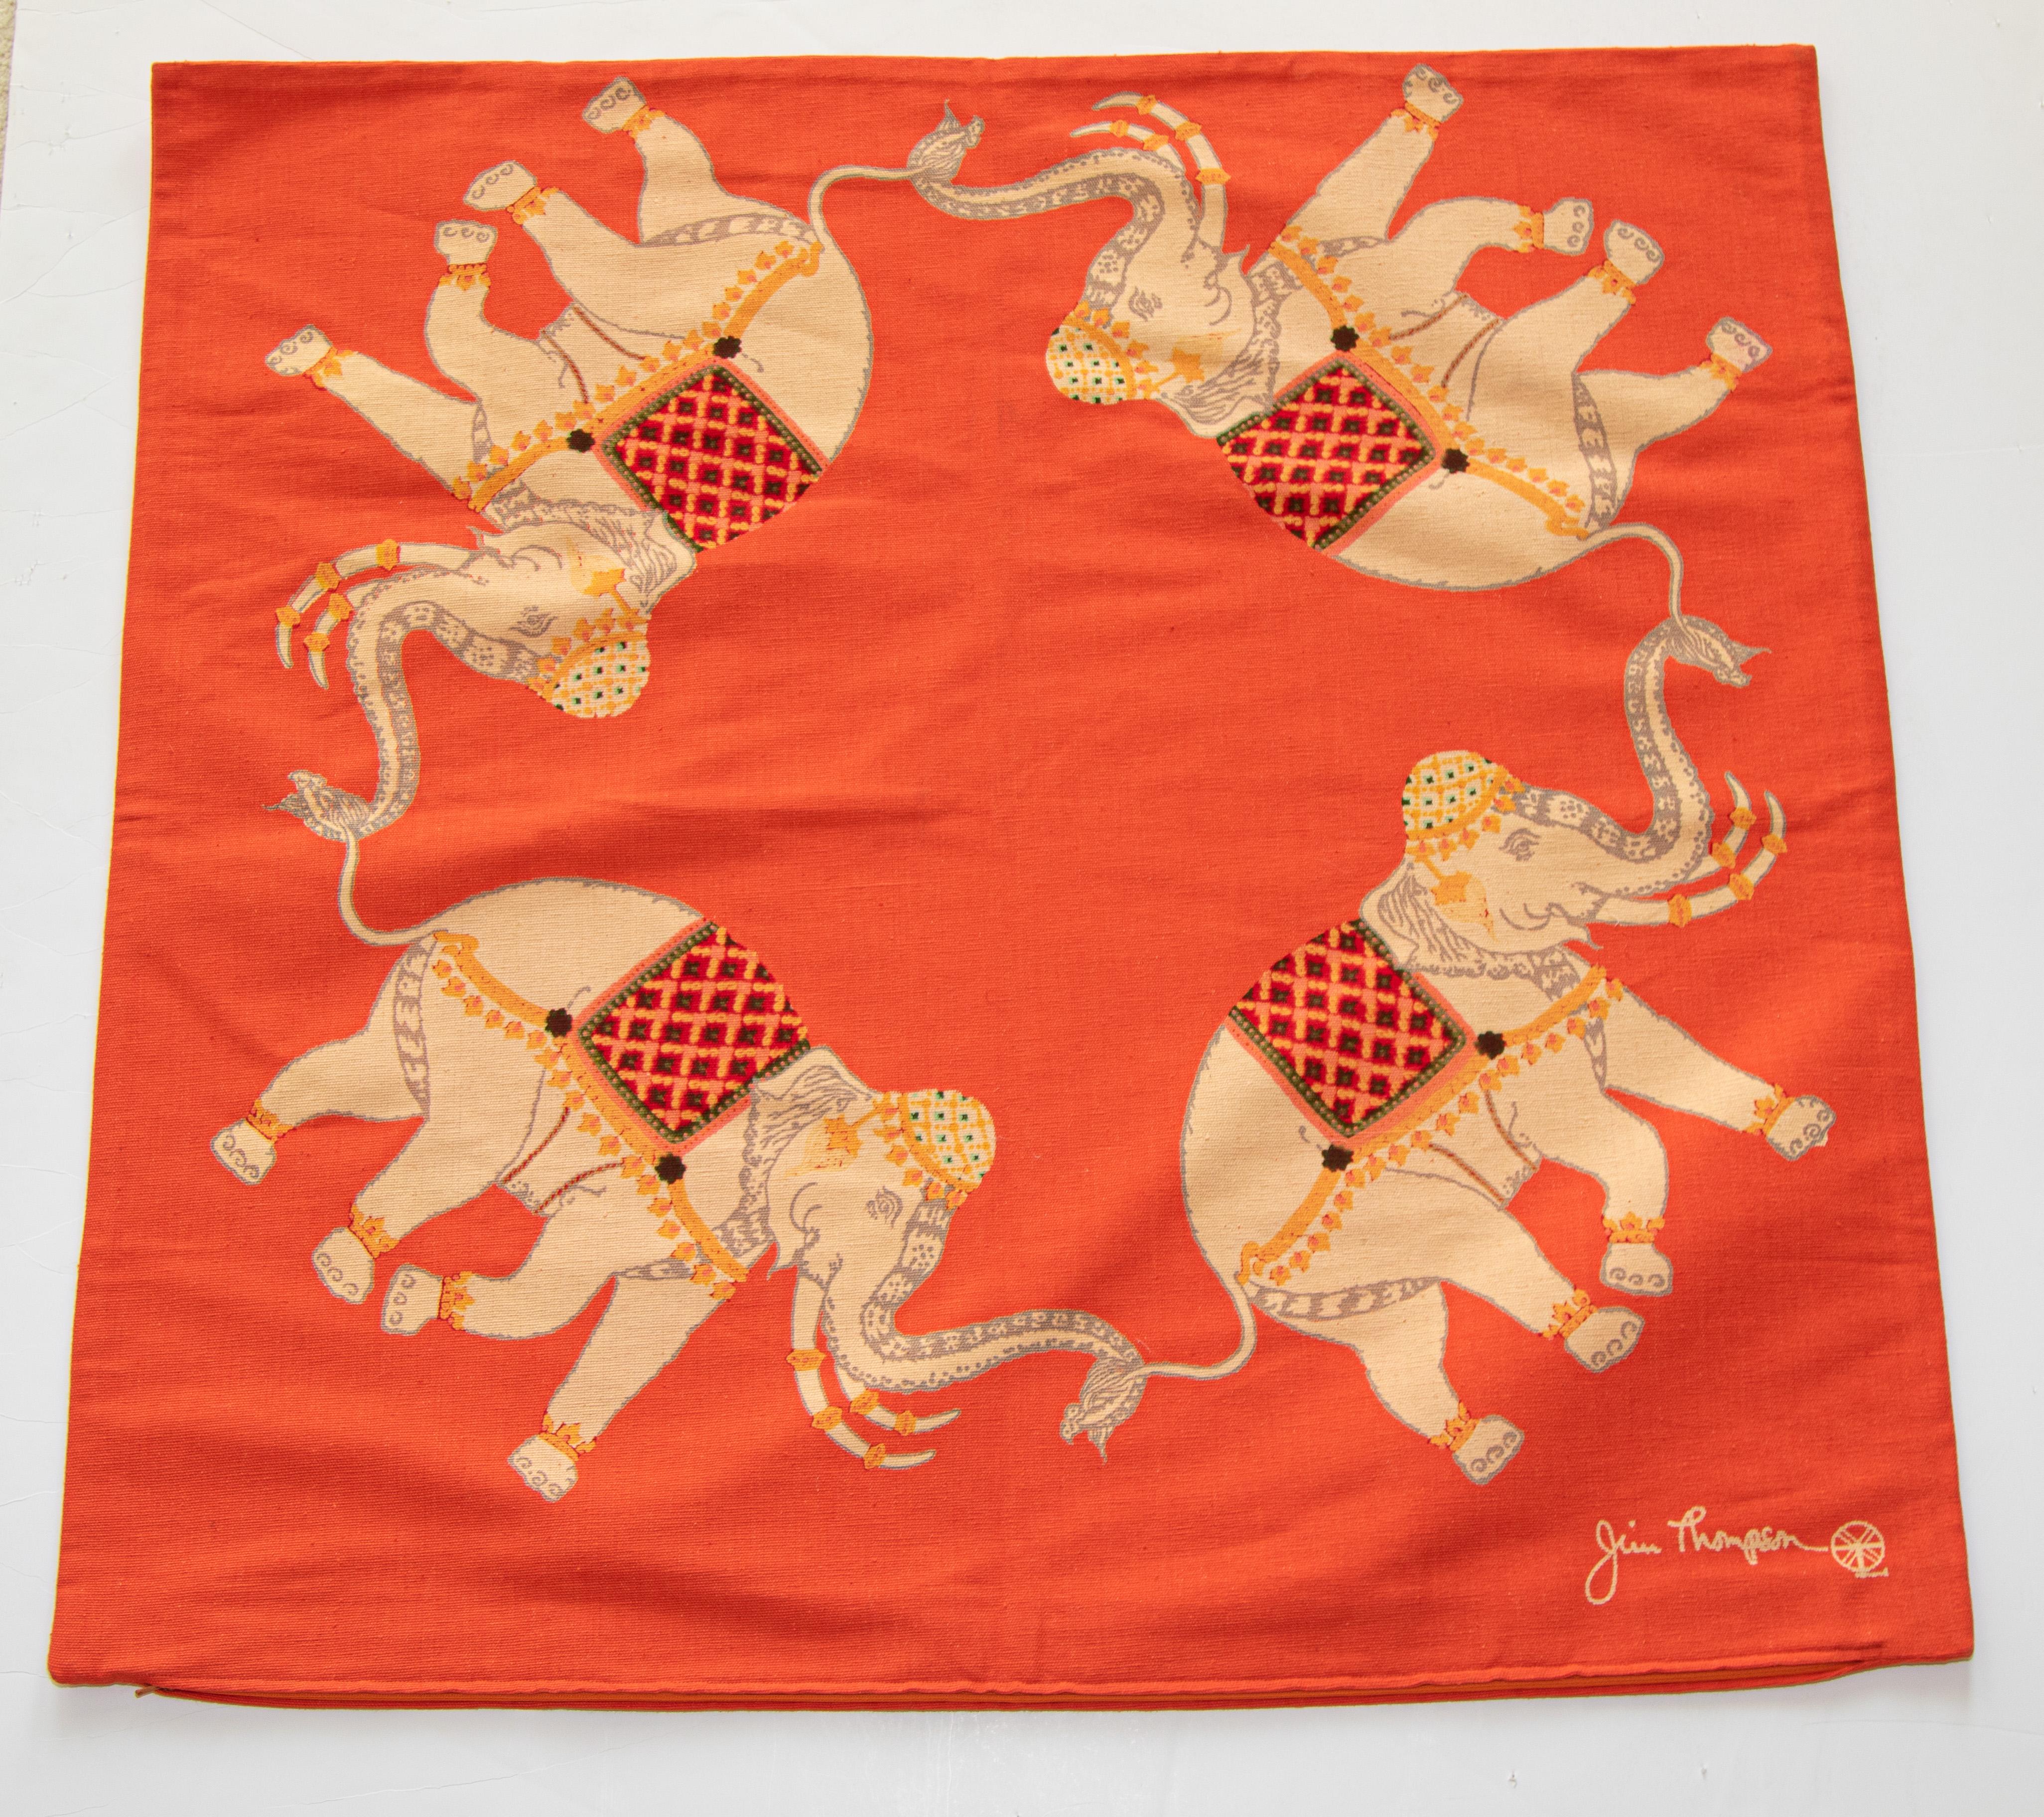 Jim Thompson Burnt Orange Large Floor Pillow Cover with Elephant Print For Sale 3